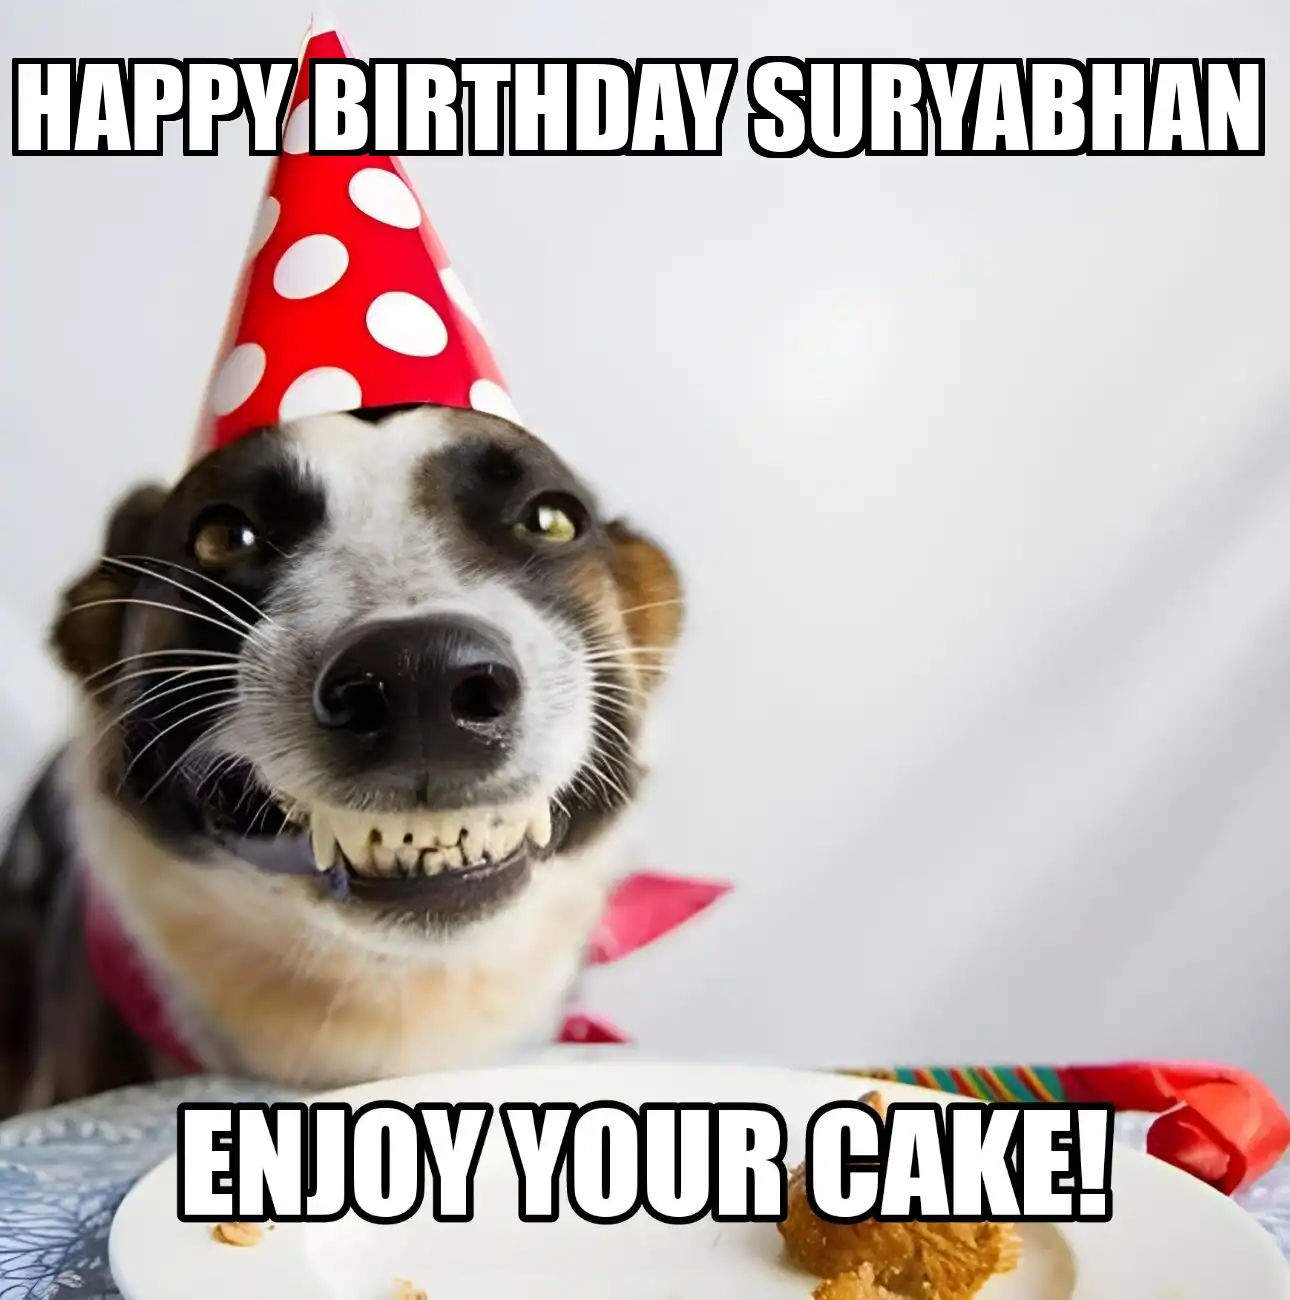 Happy Birthday Suryabhan Enjoy Your Cake Dog Meme